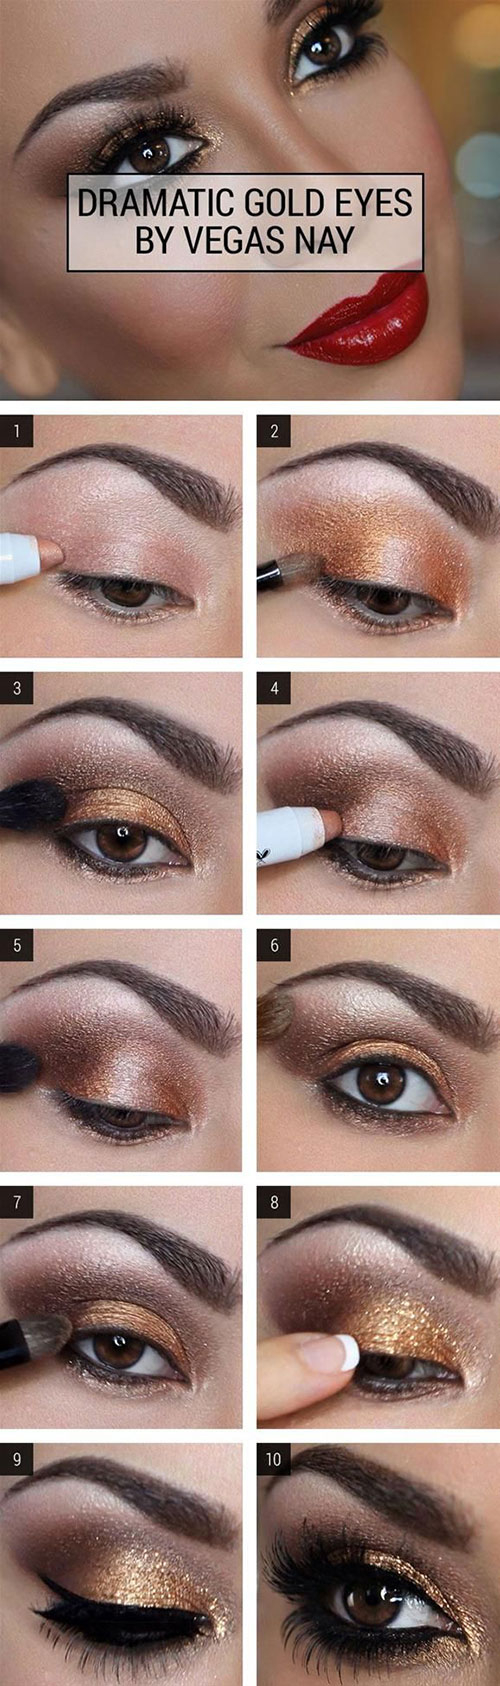 Eye Makeup Demo How To Do Smokey Eye Makeup Top 10 Tutorial Pictures For 2019